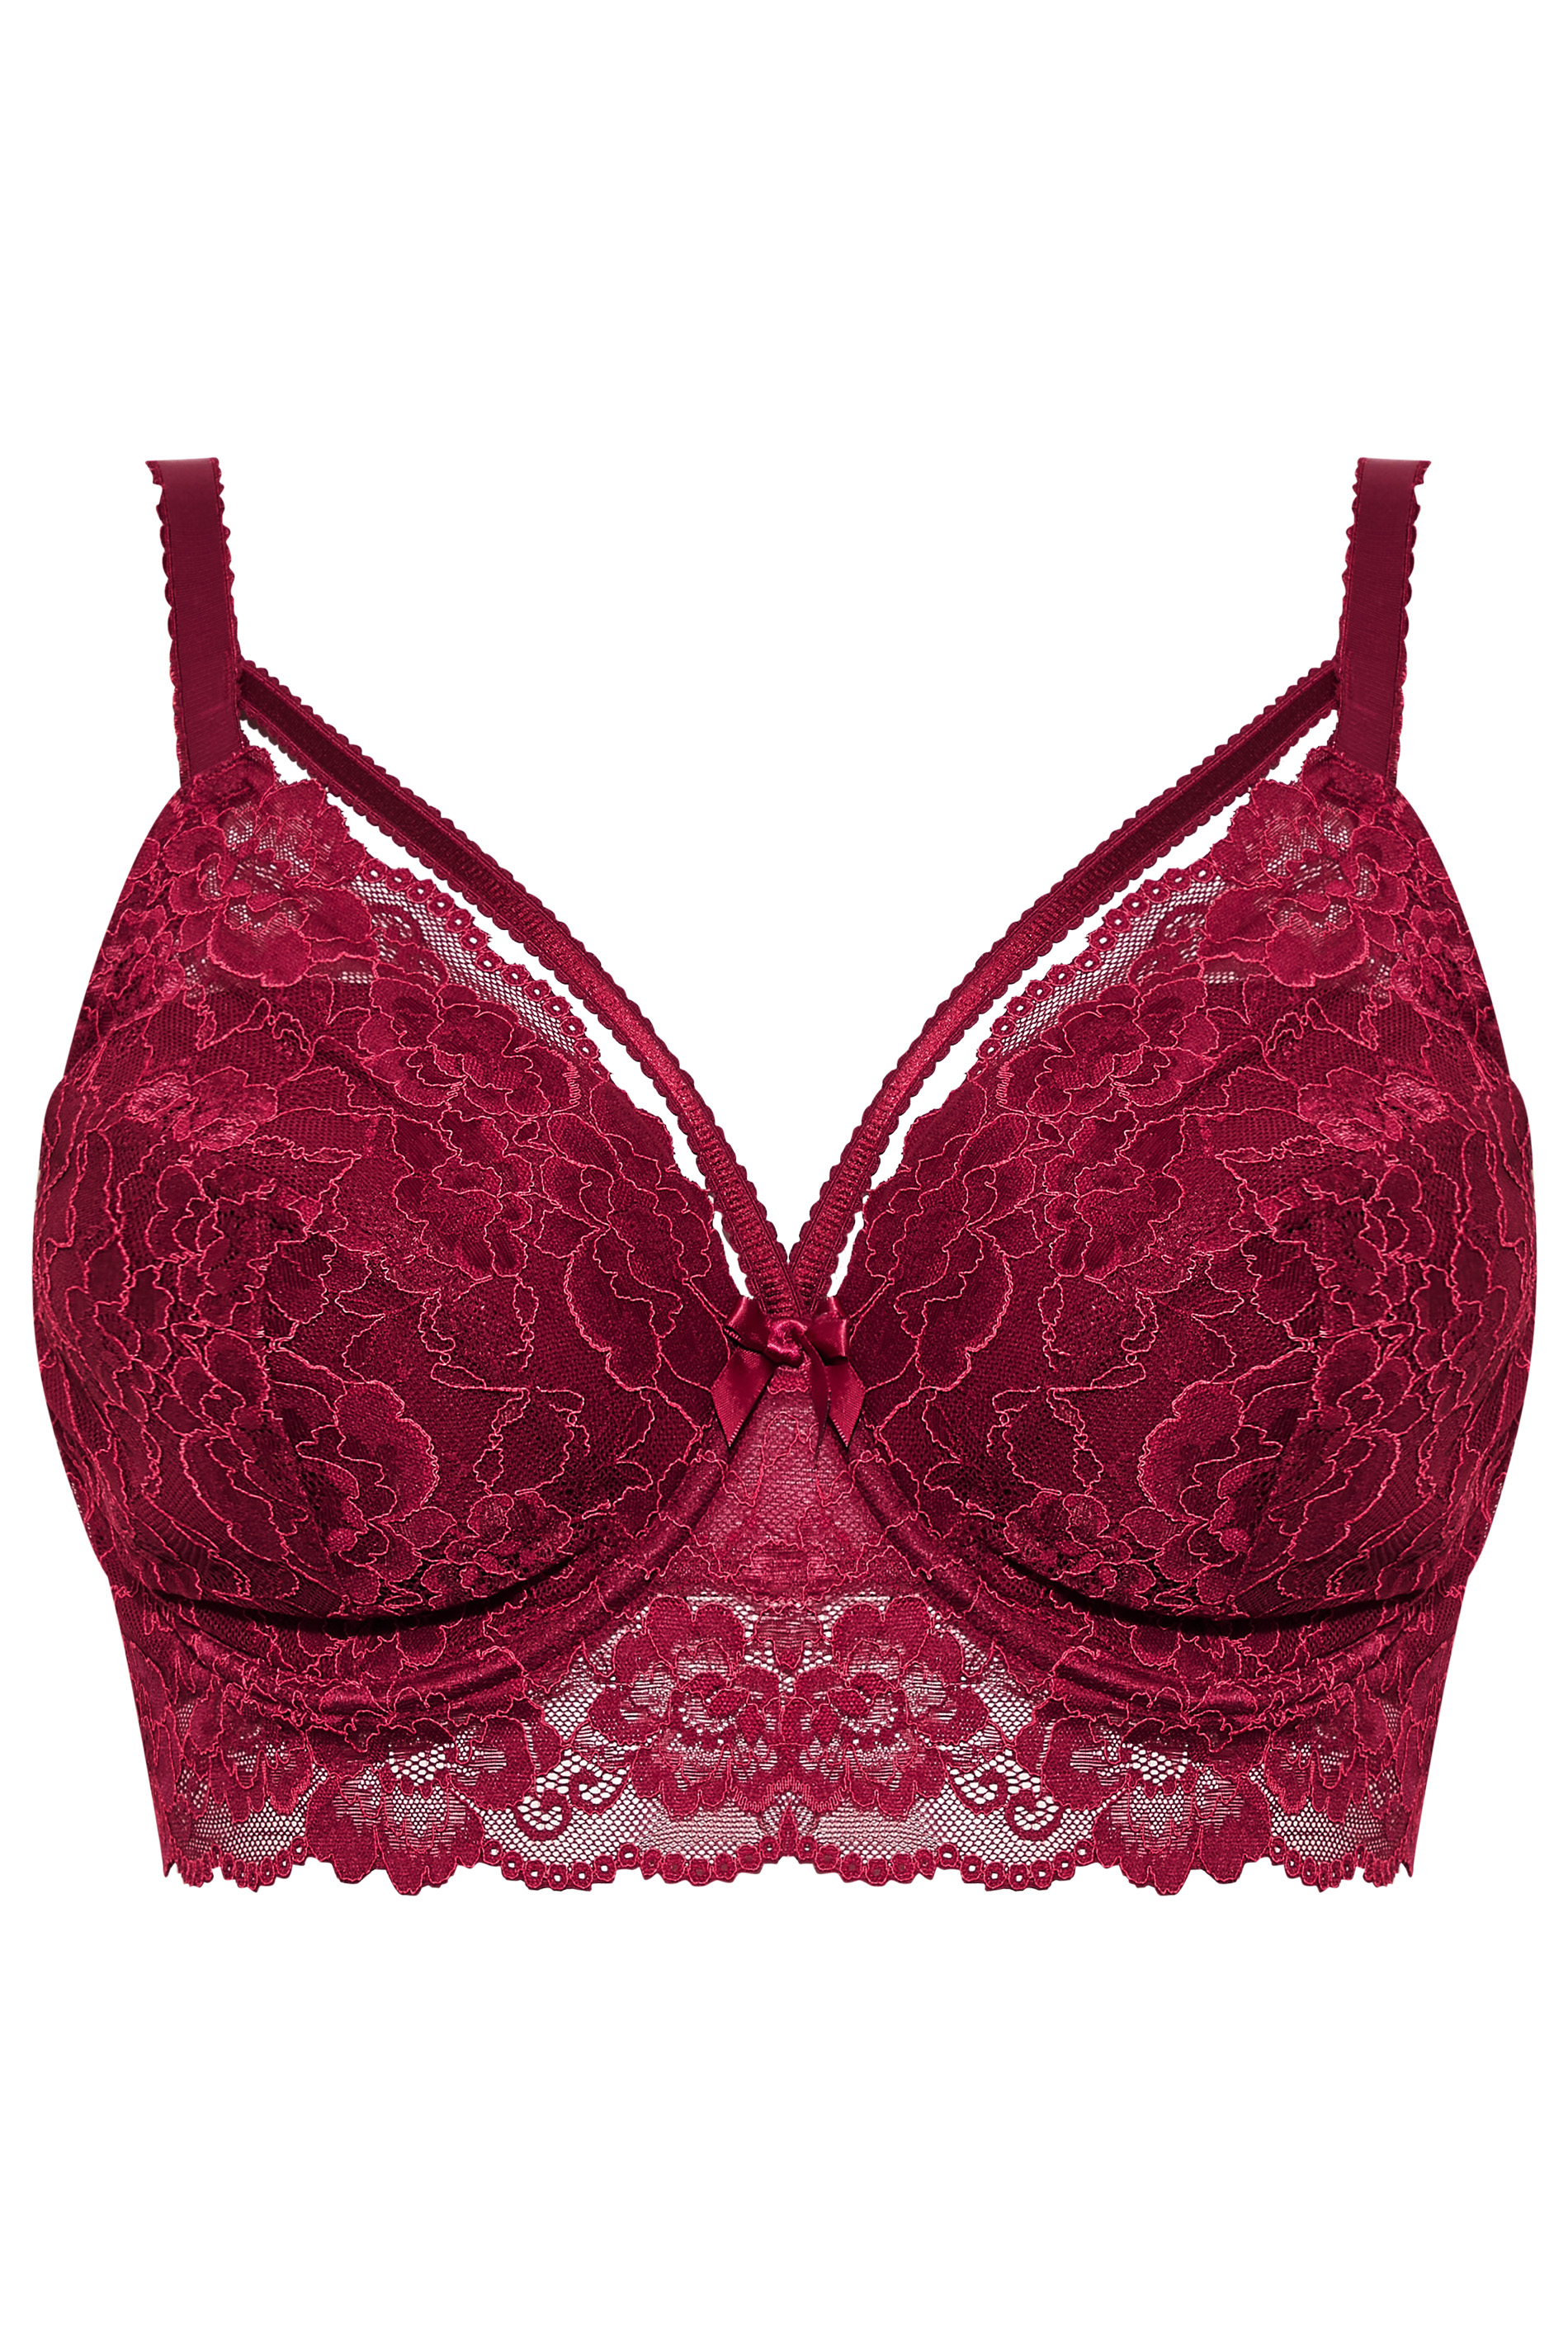 Women's burgundy push-up bra with lace - Underwear red